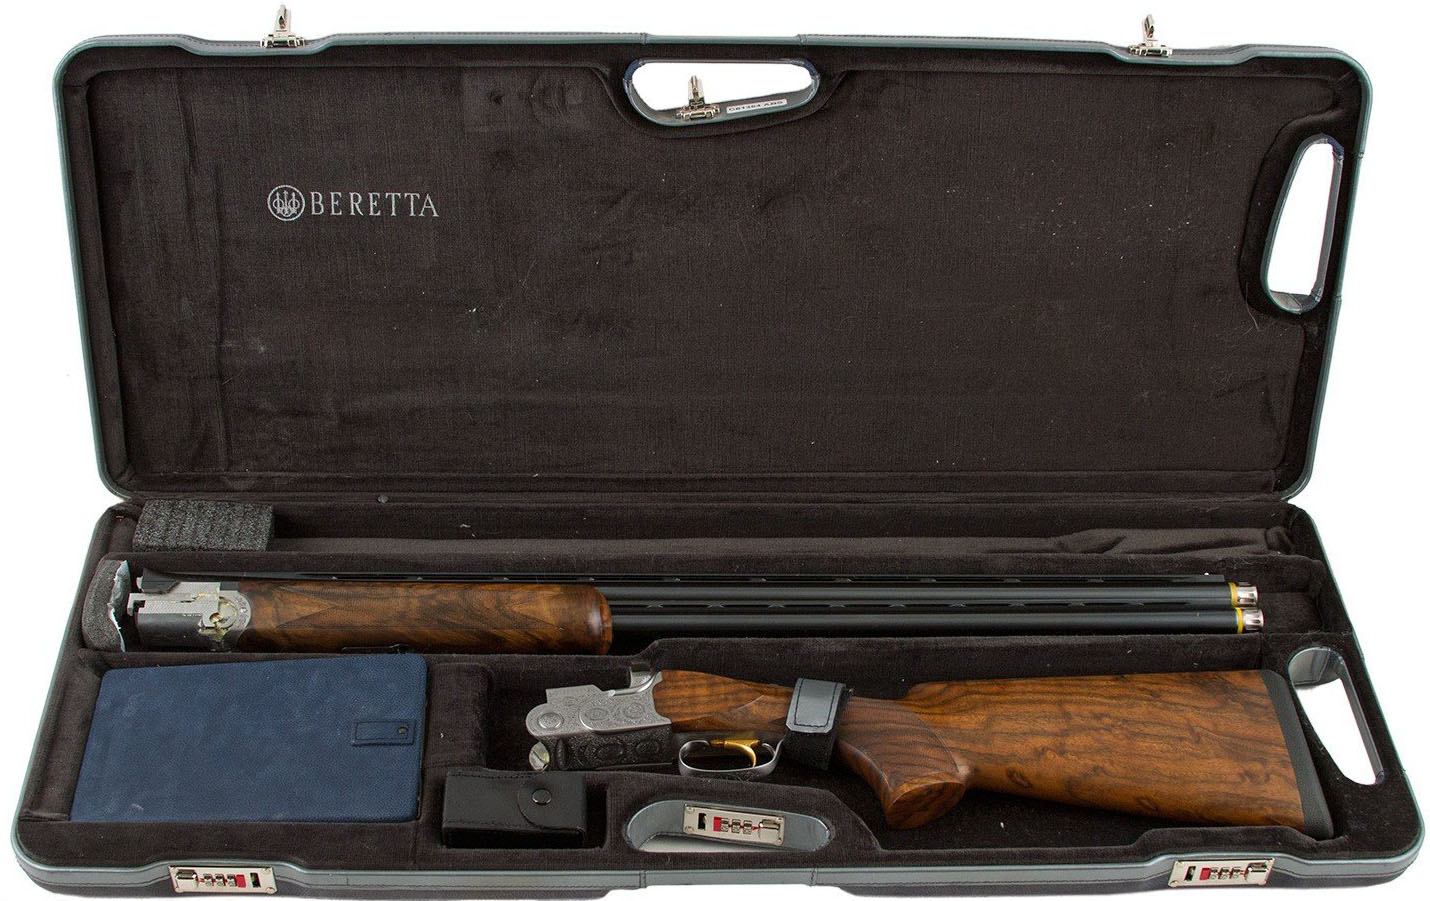 The hand-made Beretta ASEL.